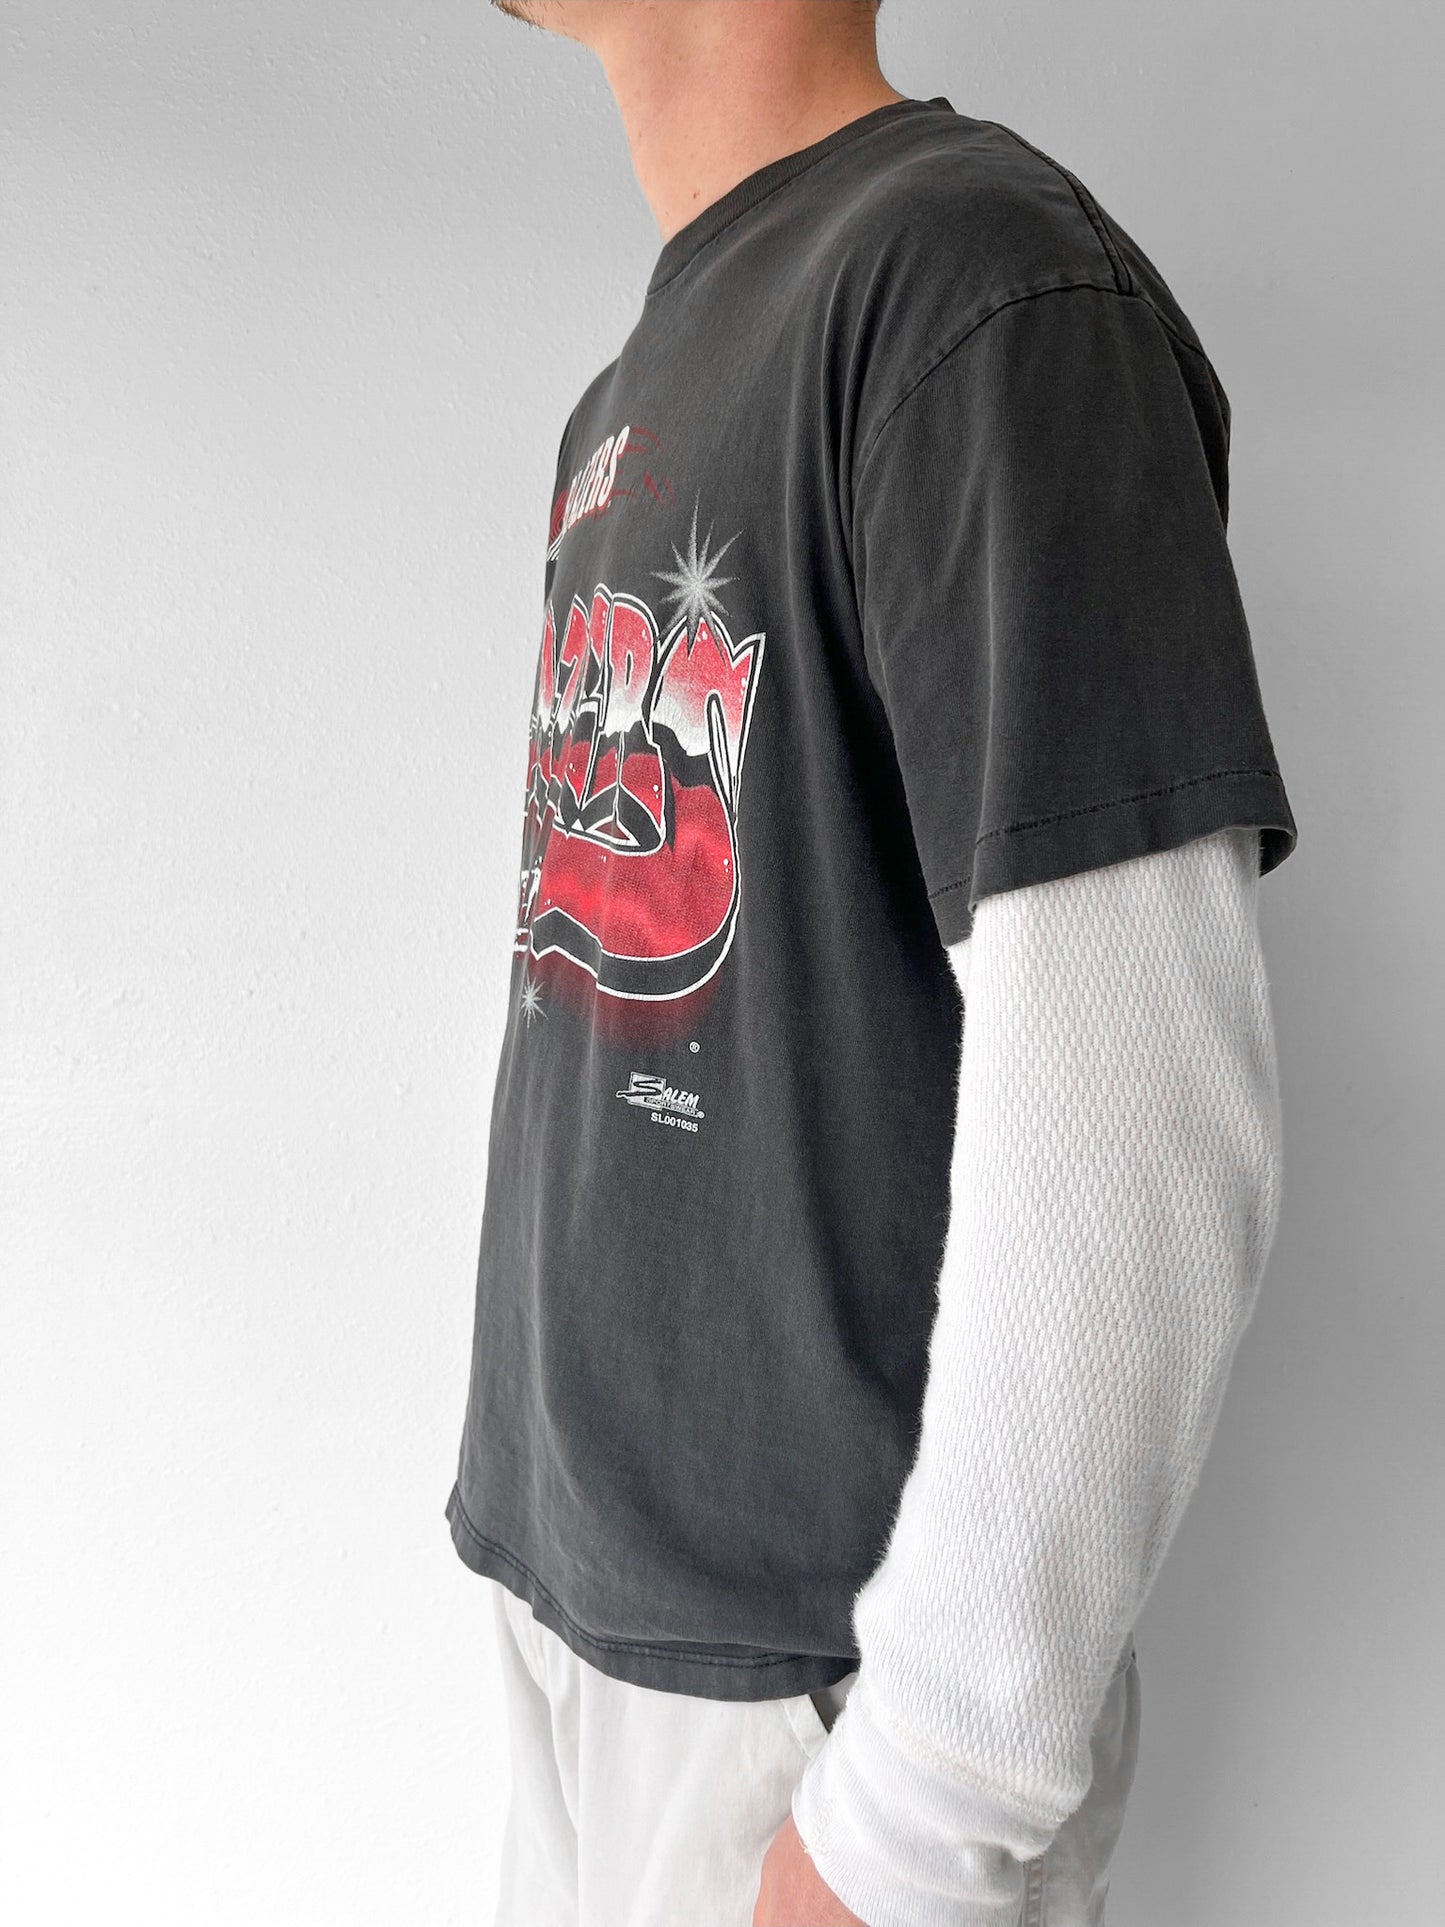 90’s Portland Trailblazers NBA Graffiti Shirt - M